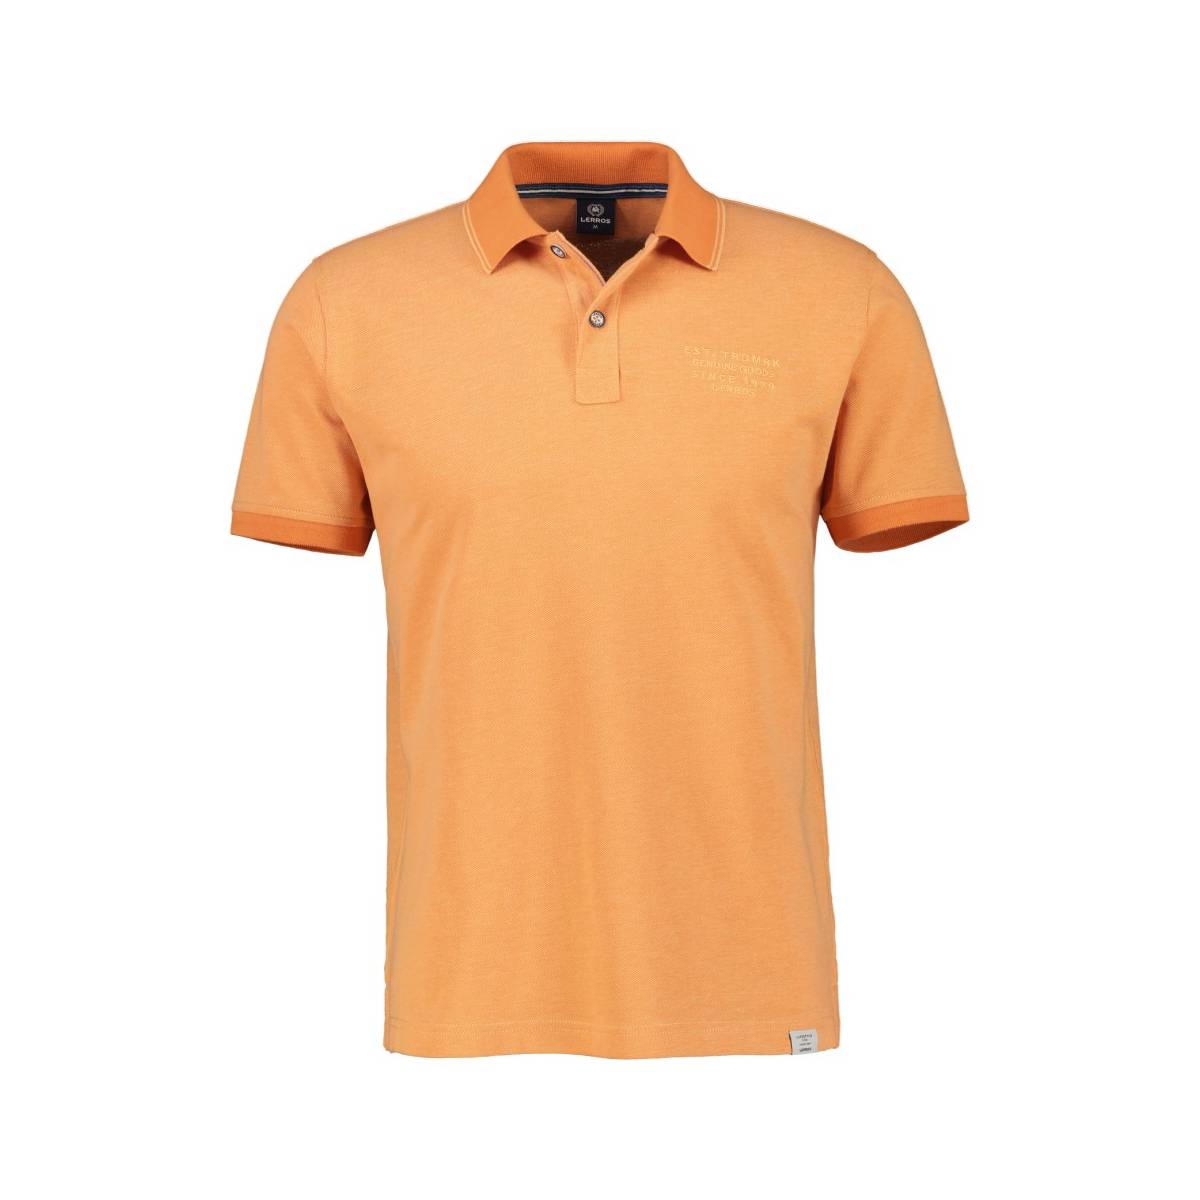 LERROS  t shirts oranje -  model 2433239 - Herenkleding t shirts oranje